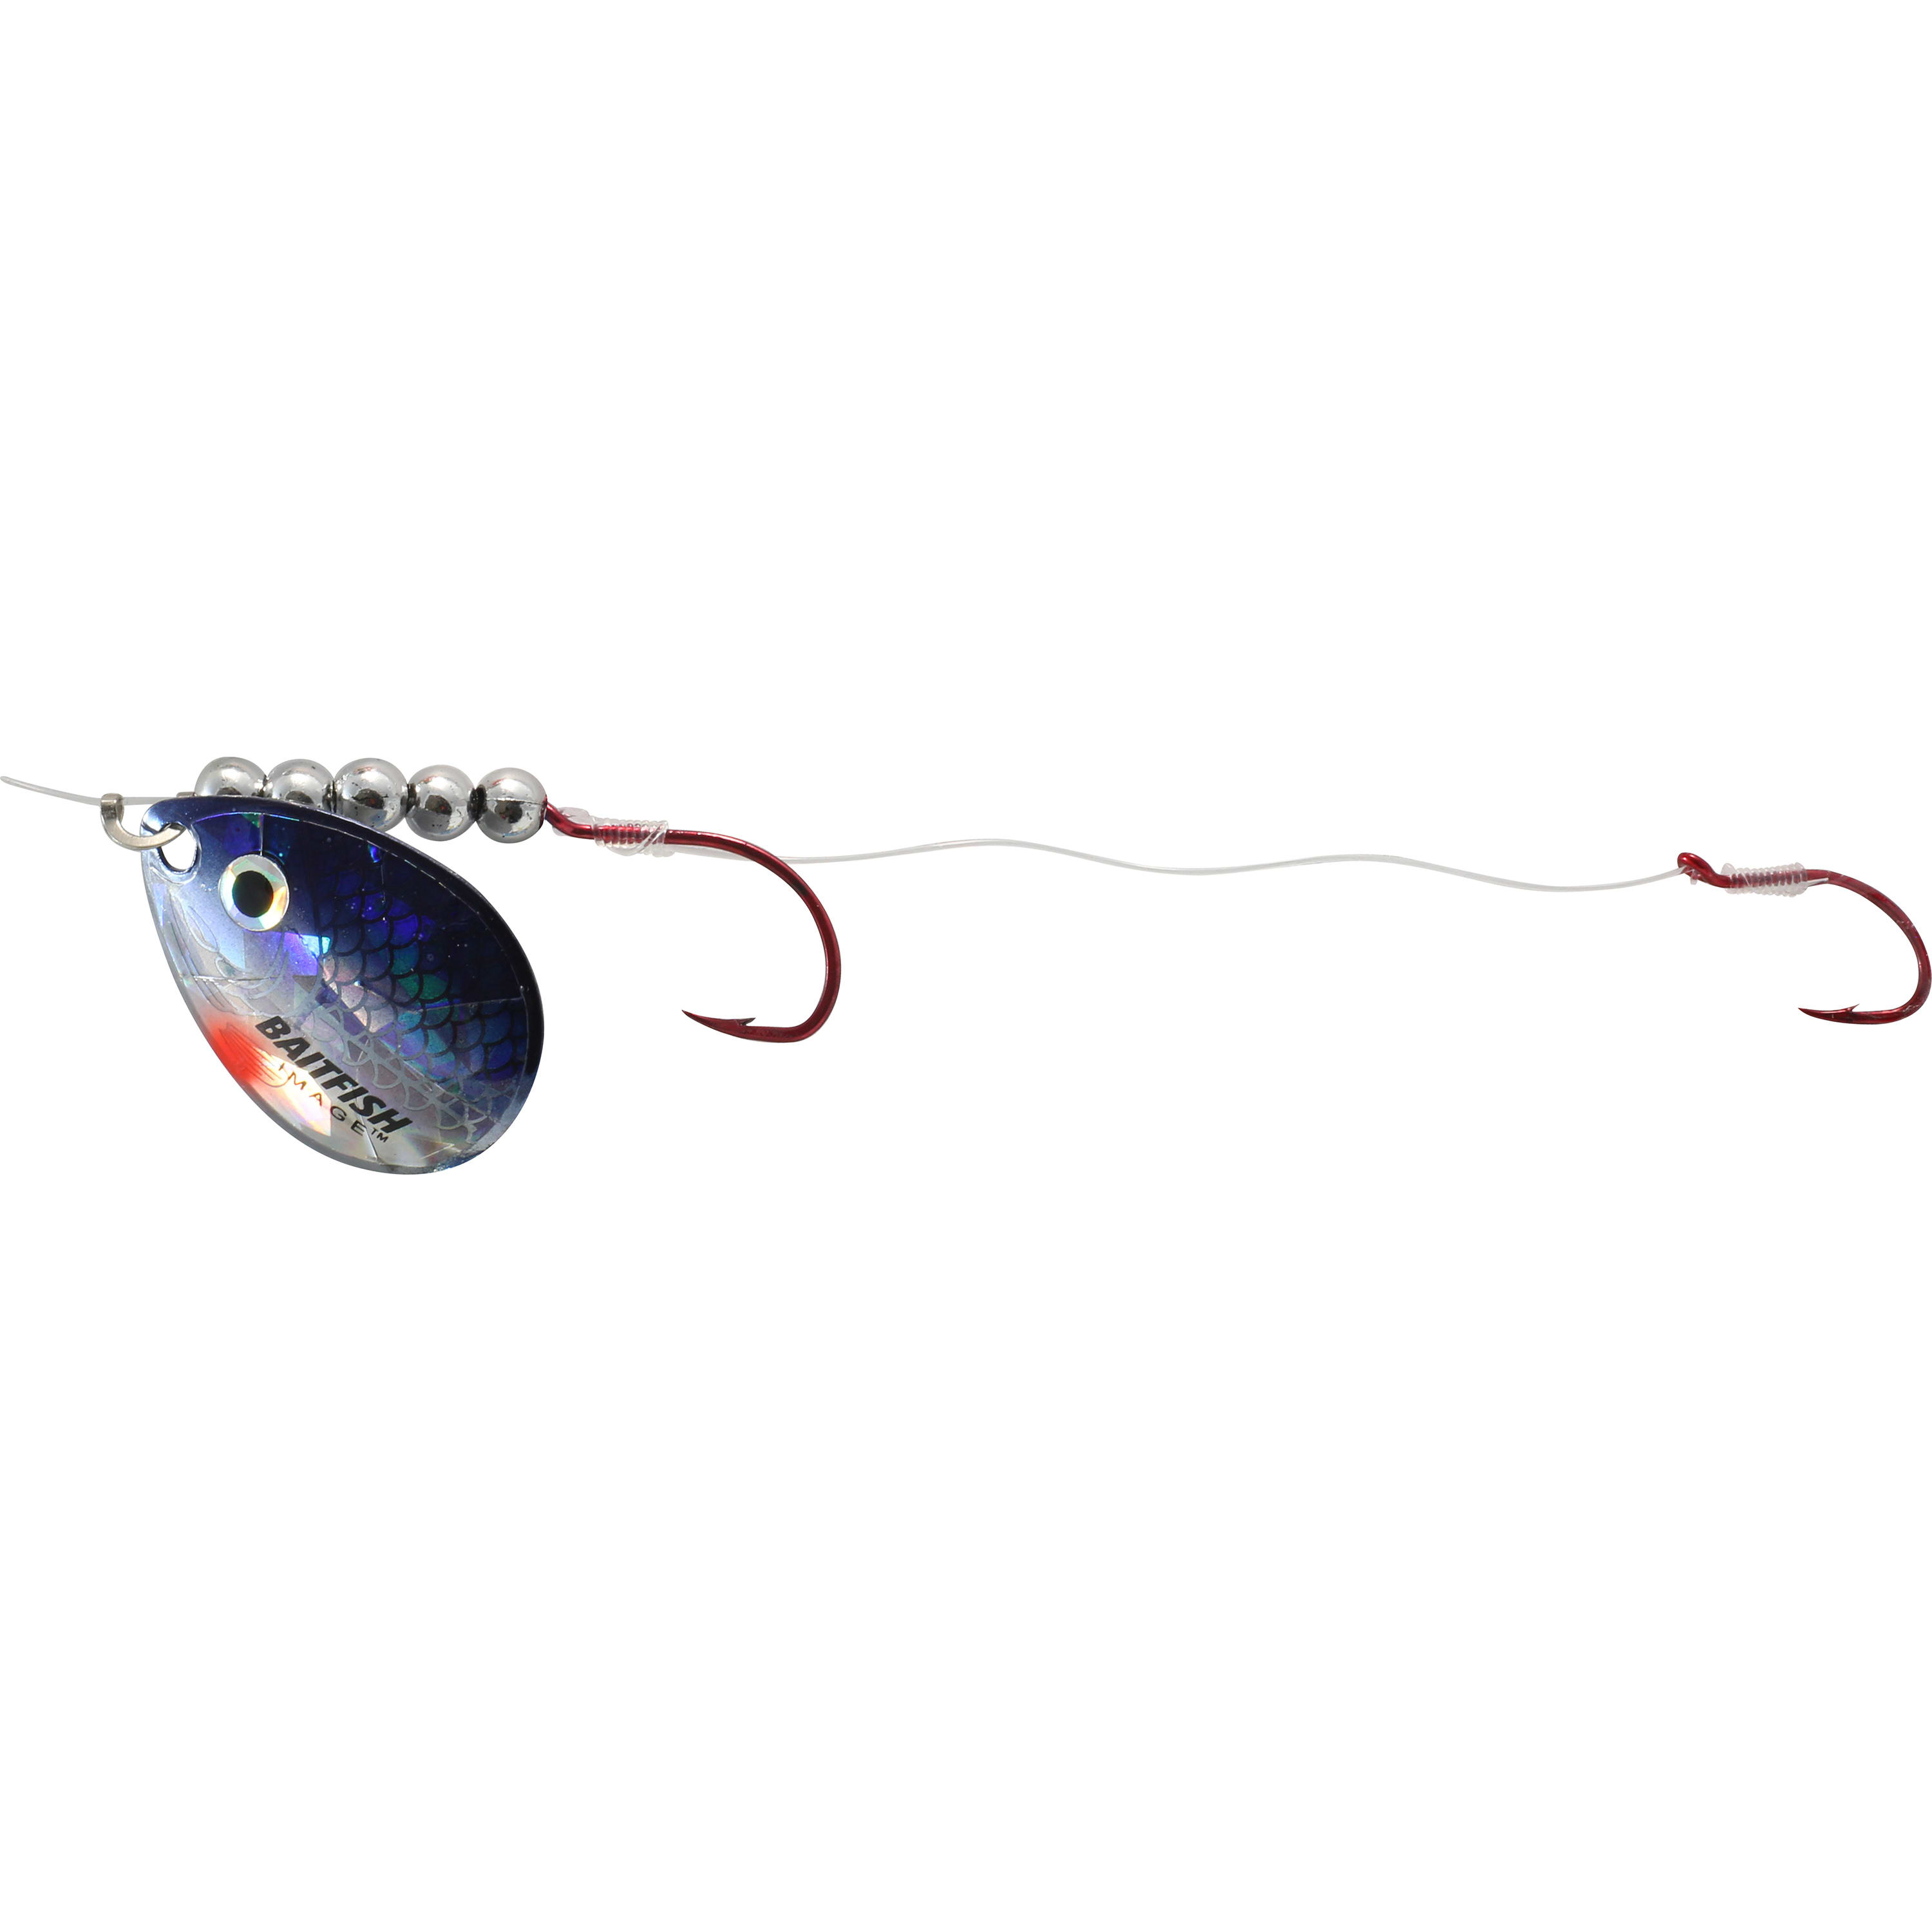 Northland® Baitfish Spinner Harness